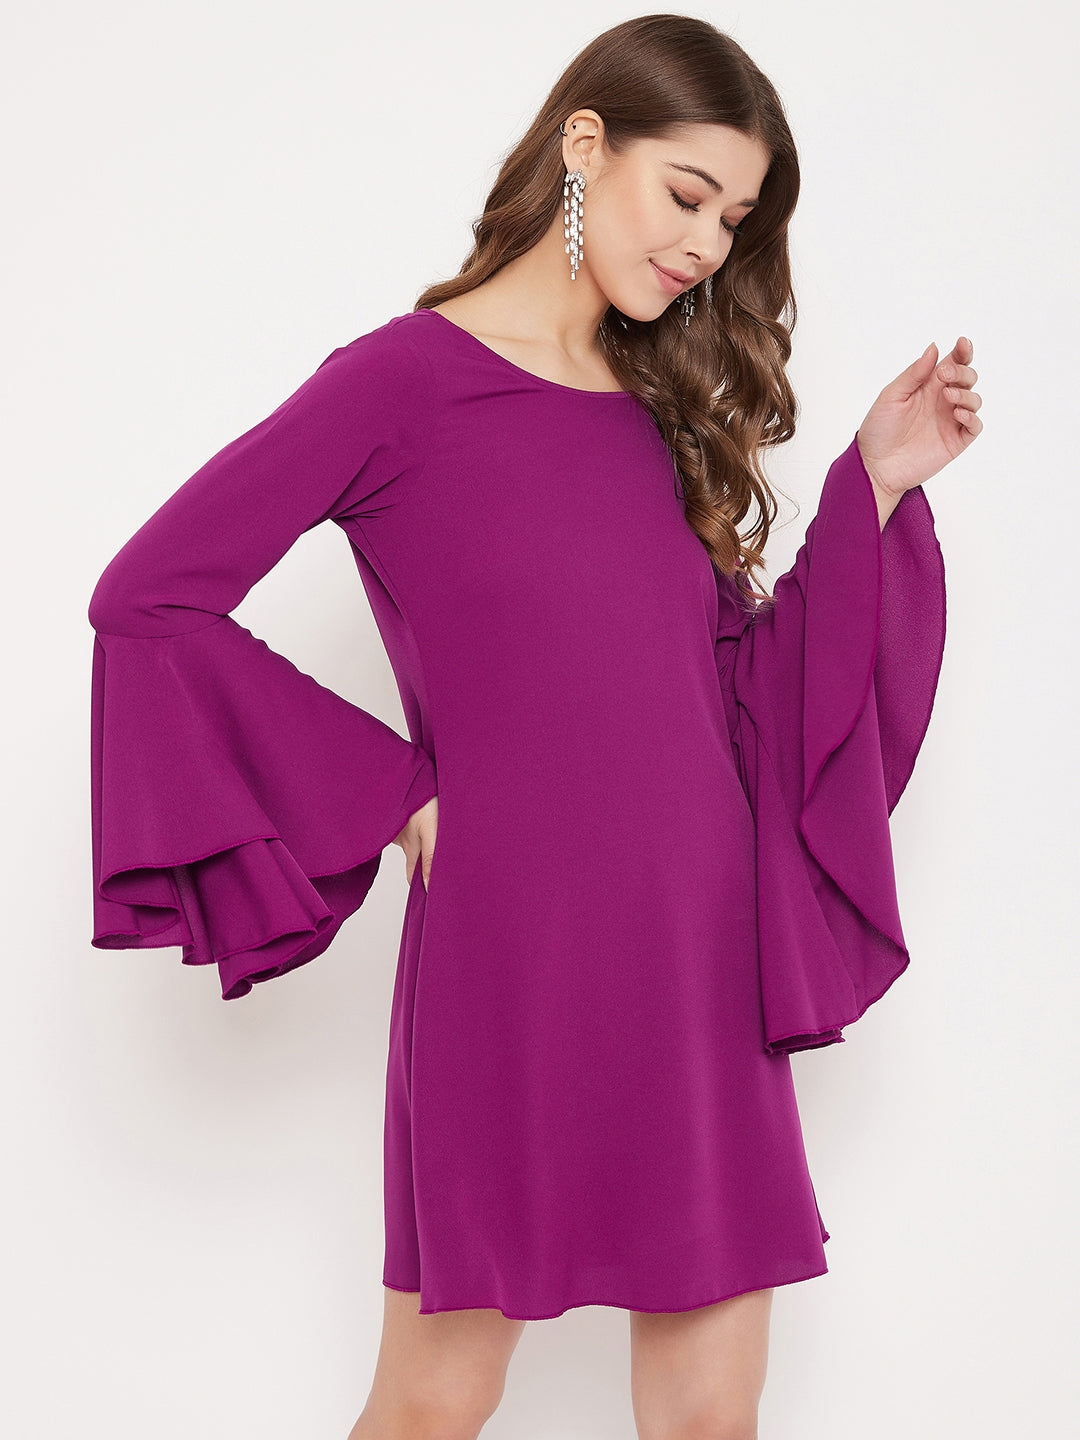 Berrylush Women Solid Purple Bell Sleeves A-Line Mini Dress